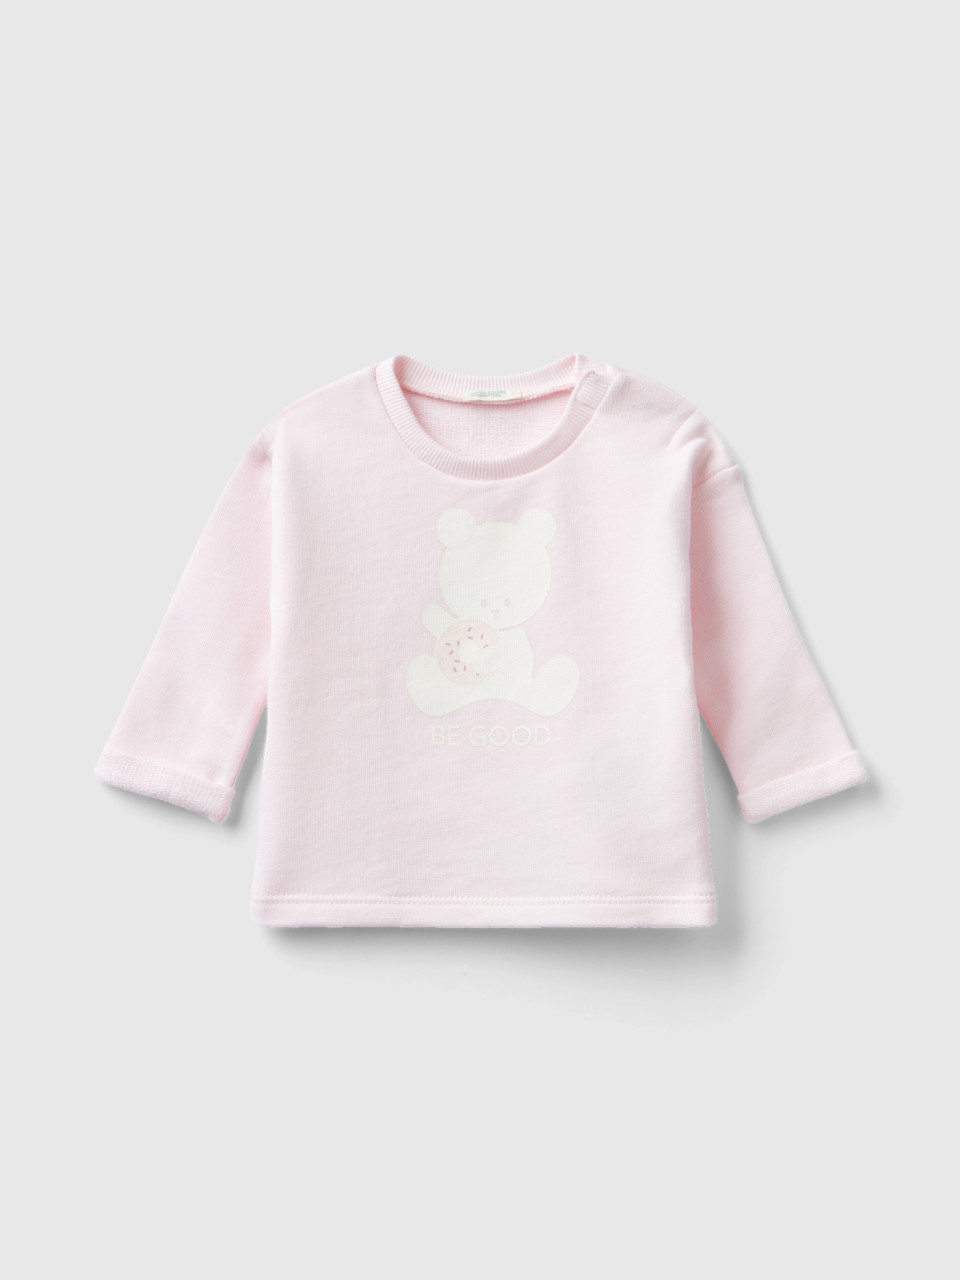 Benetton, Organic Cotton Sweatshirt With Print, Soft Pink, Kids